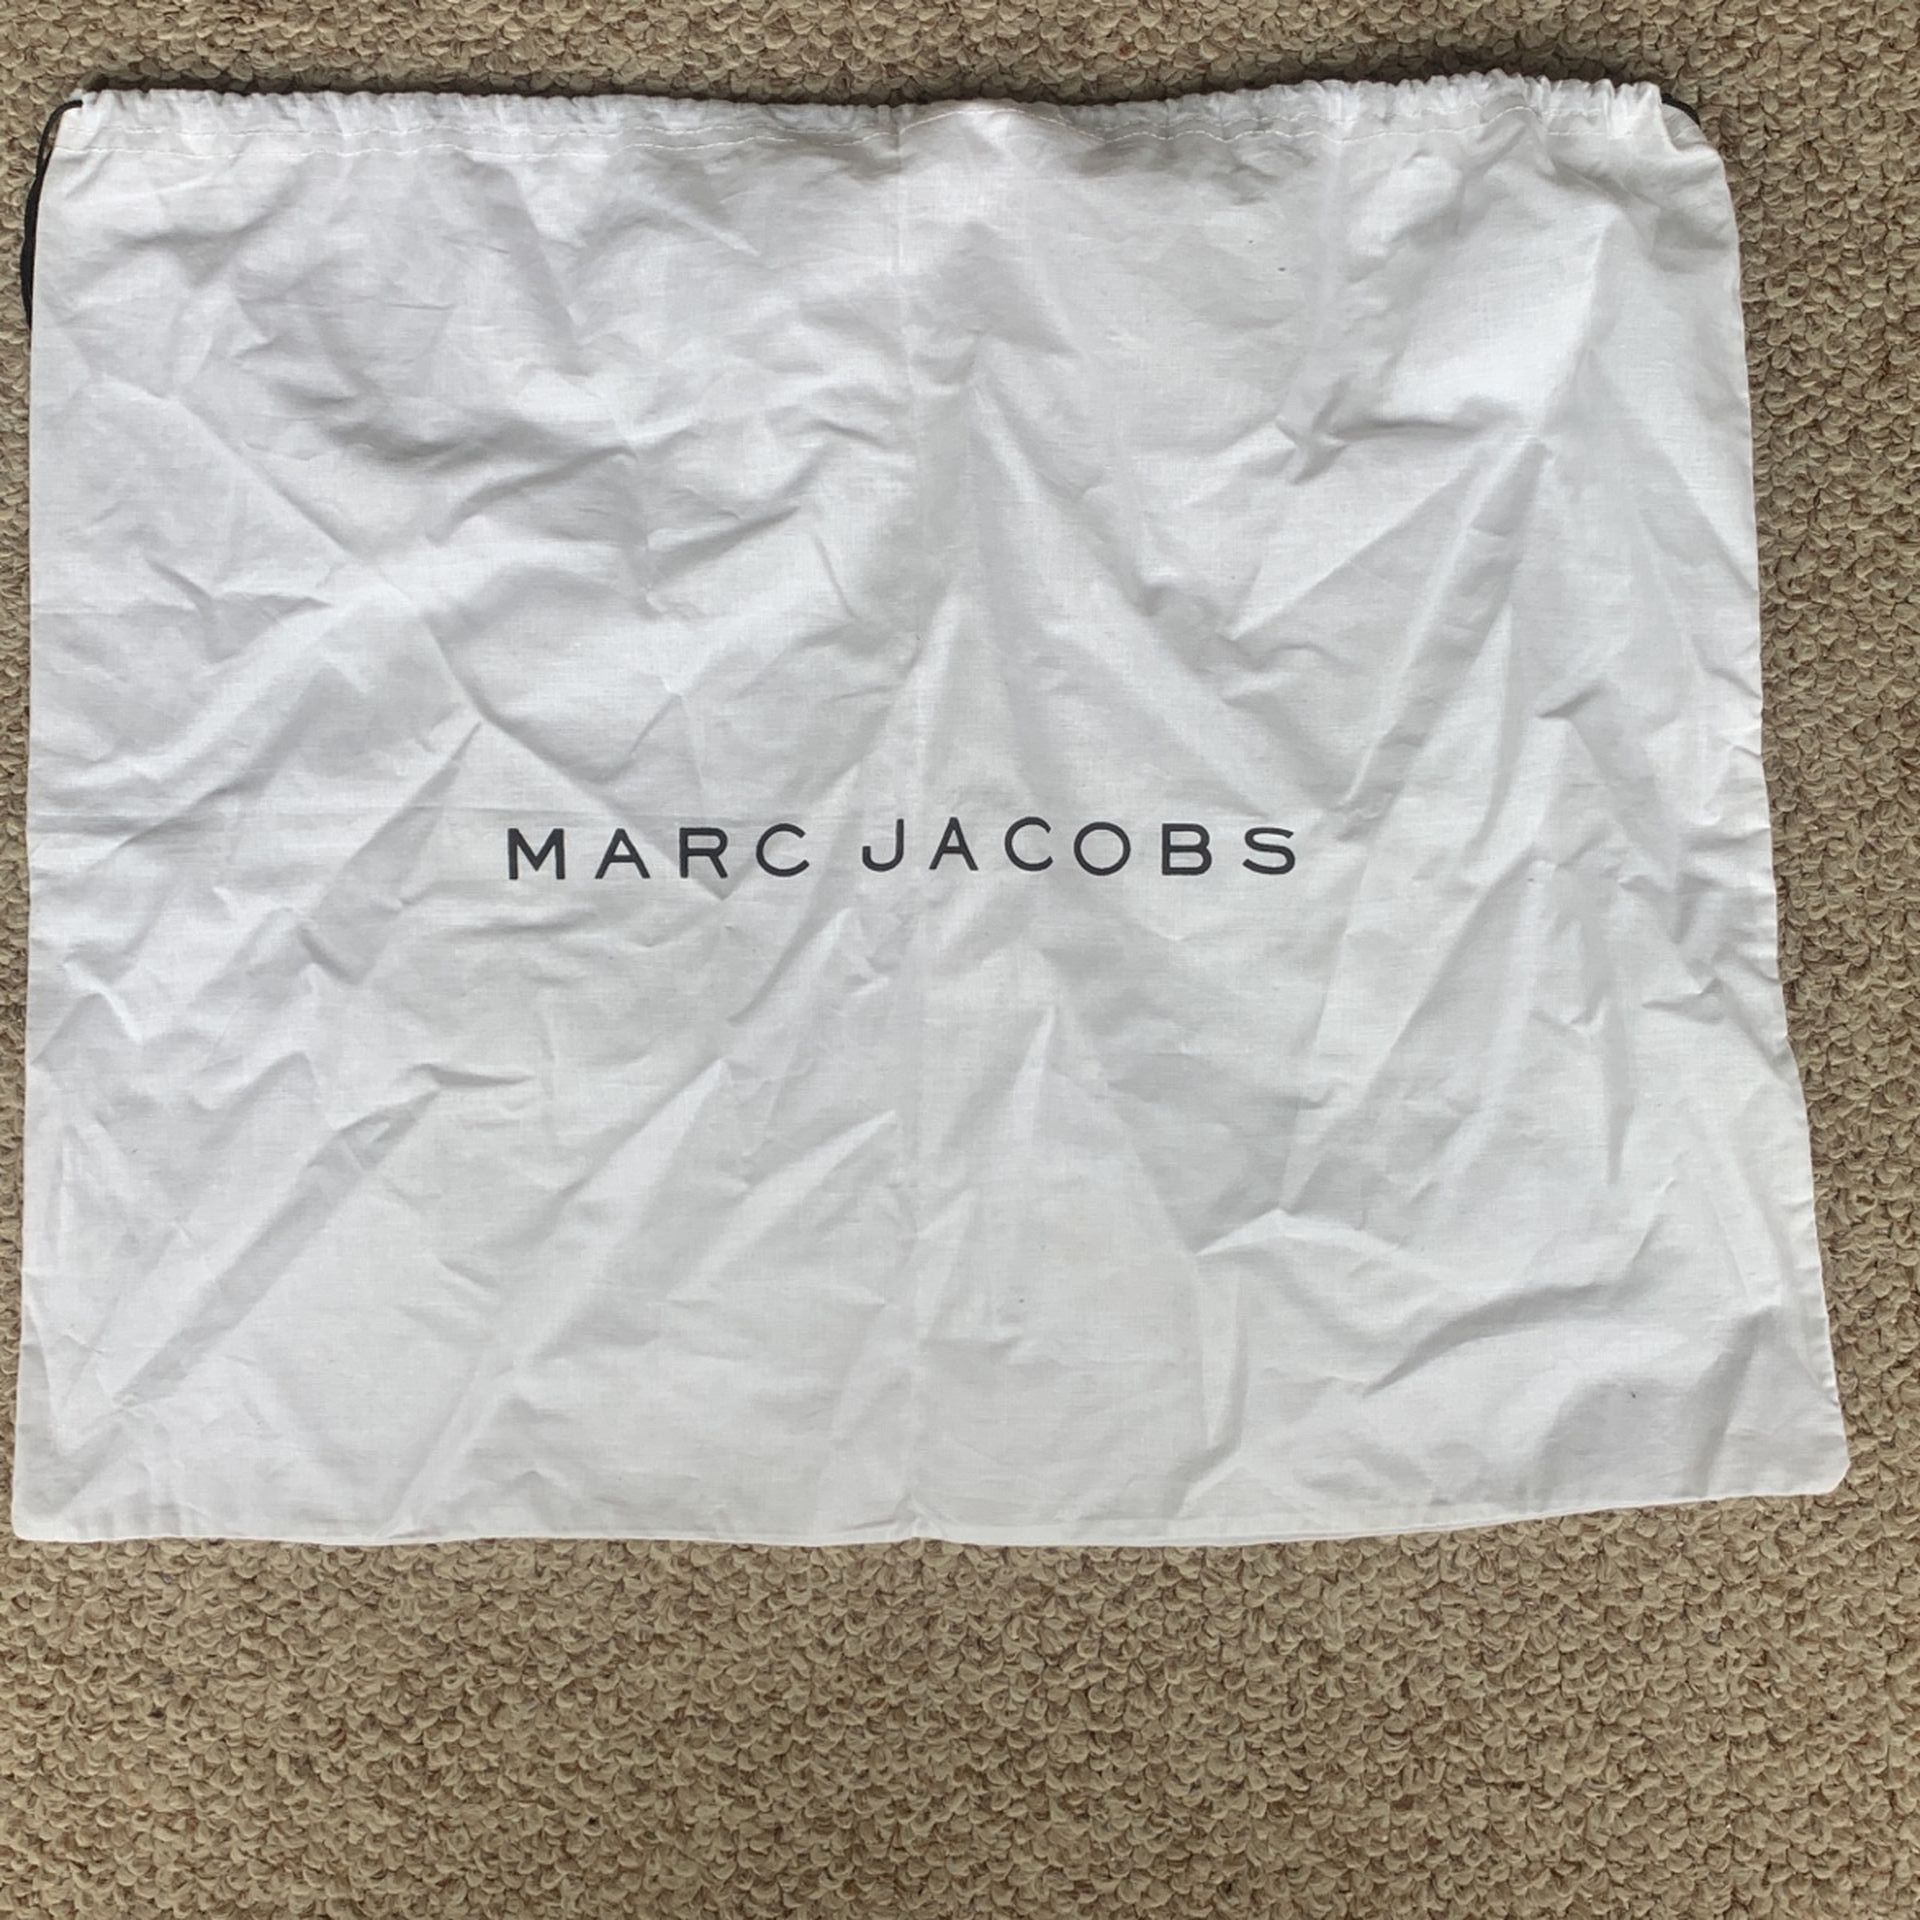 Marc Jacobs Black Leather Bag